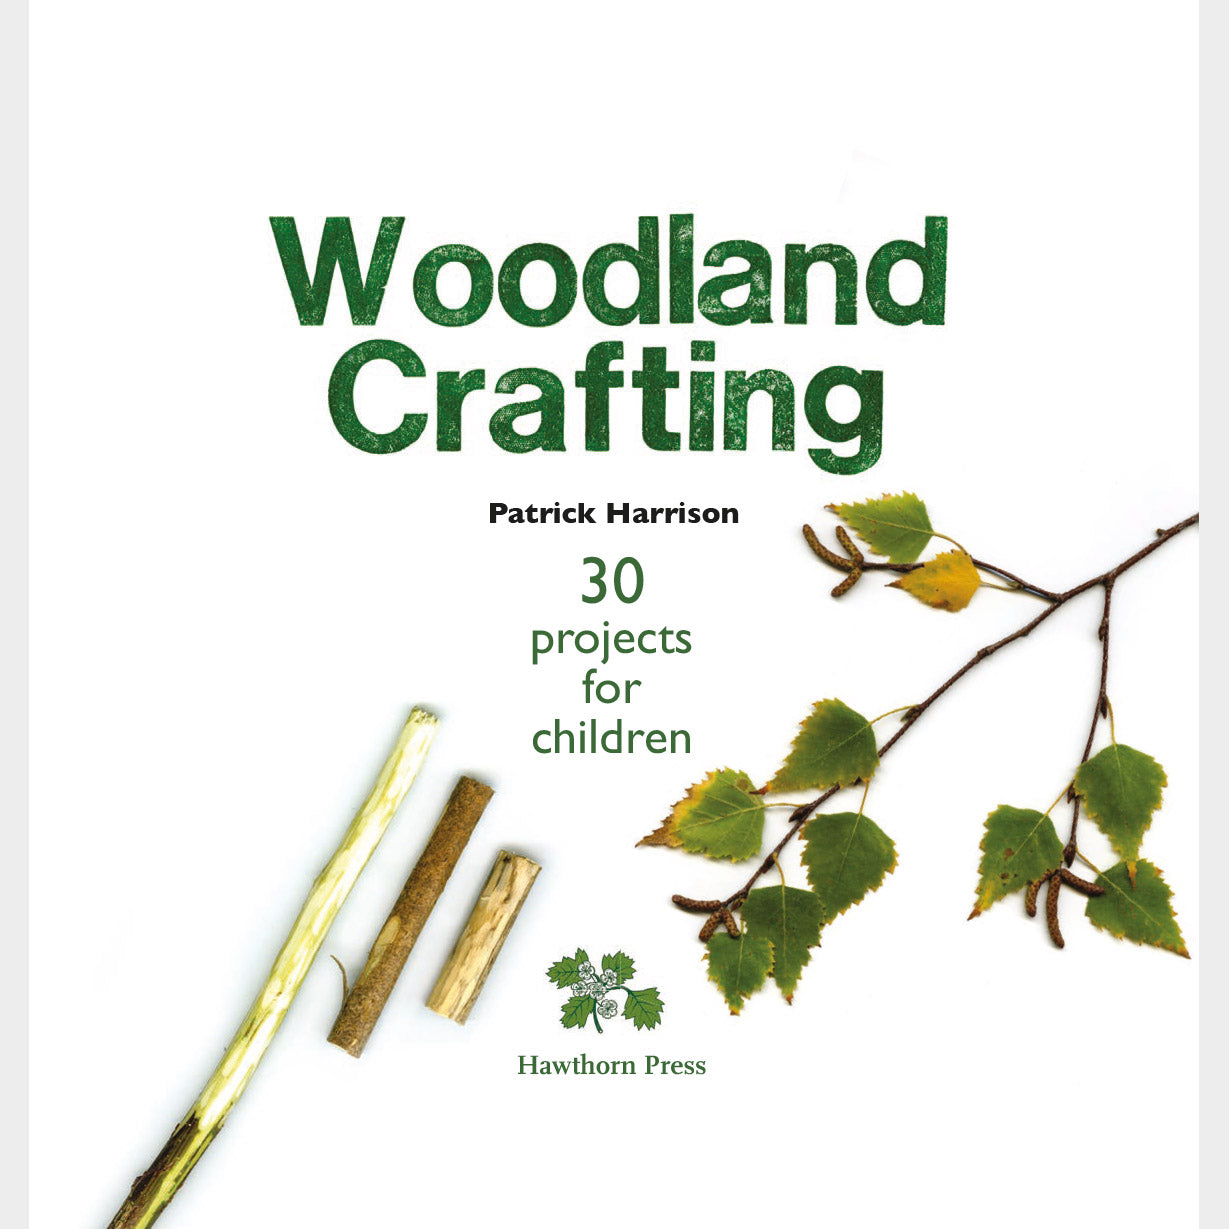 Woodland Crafting